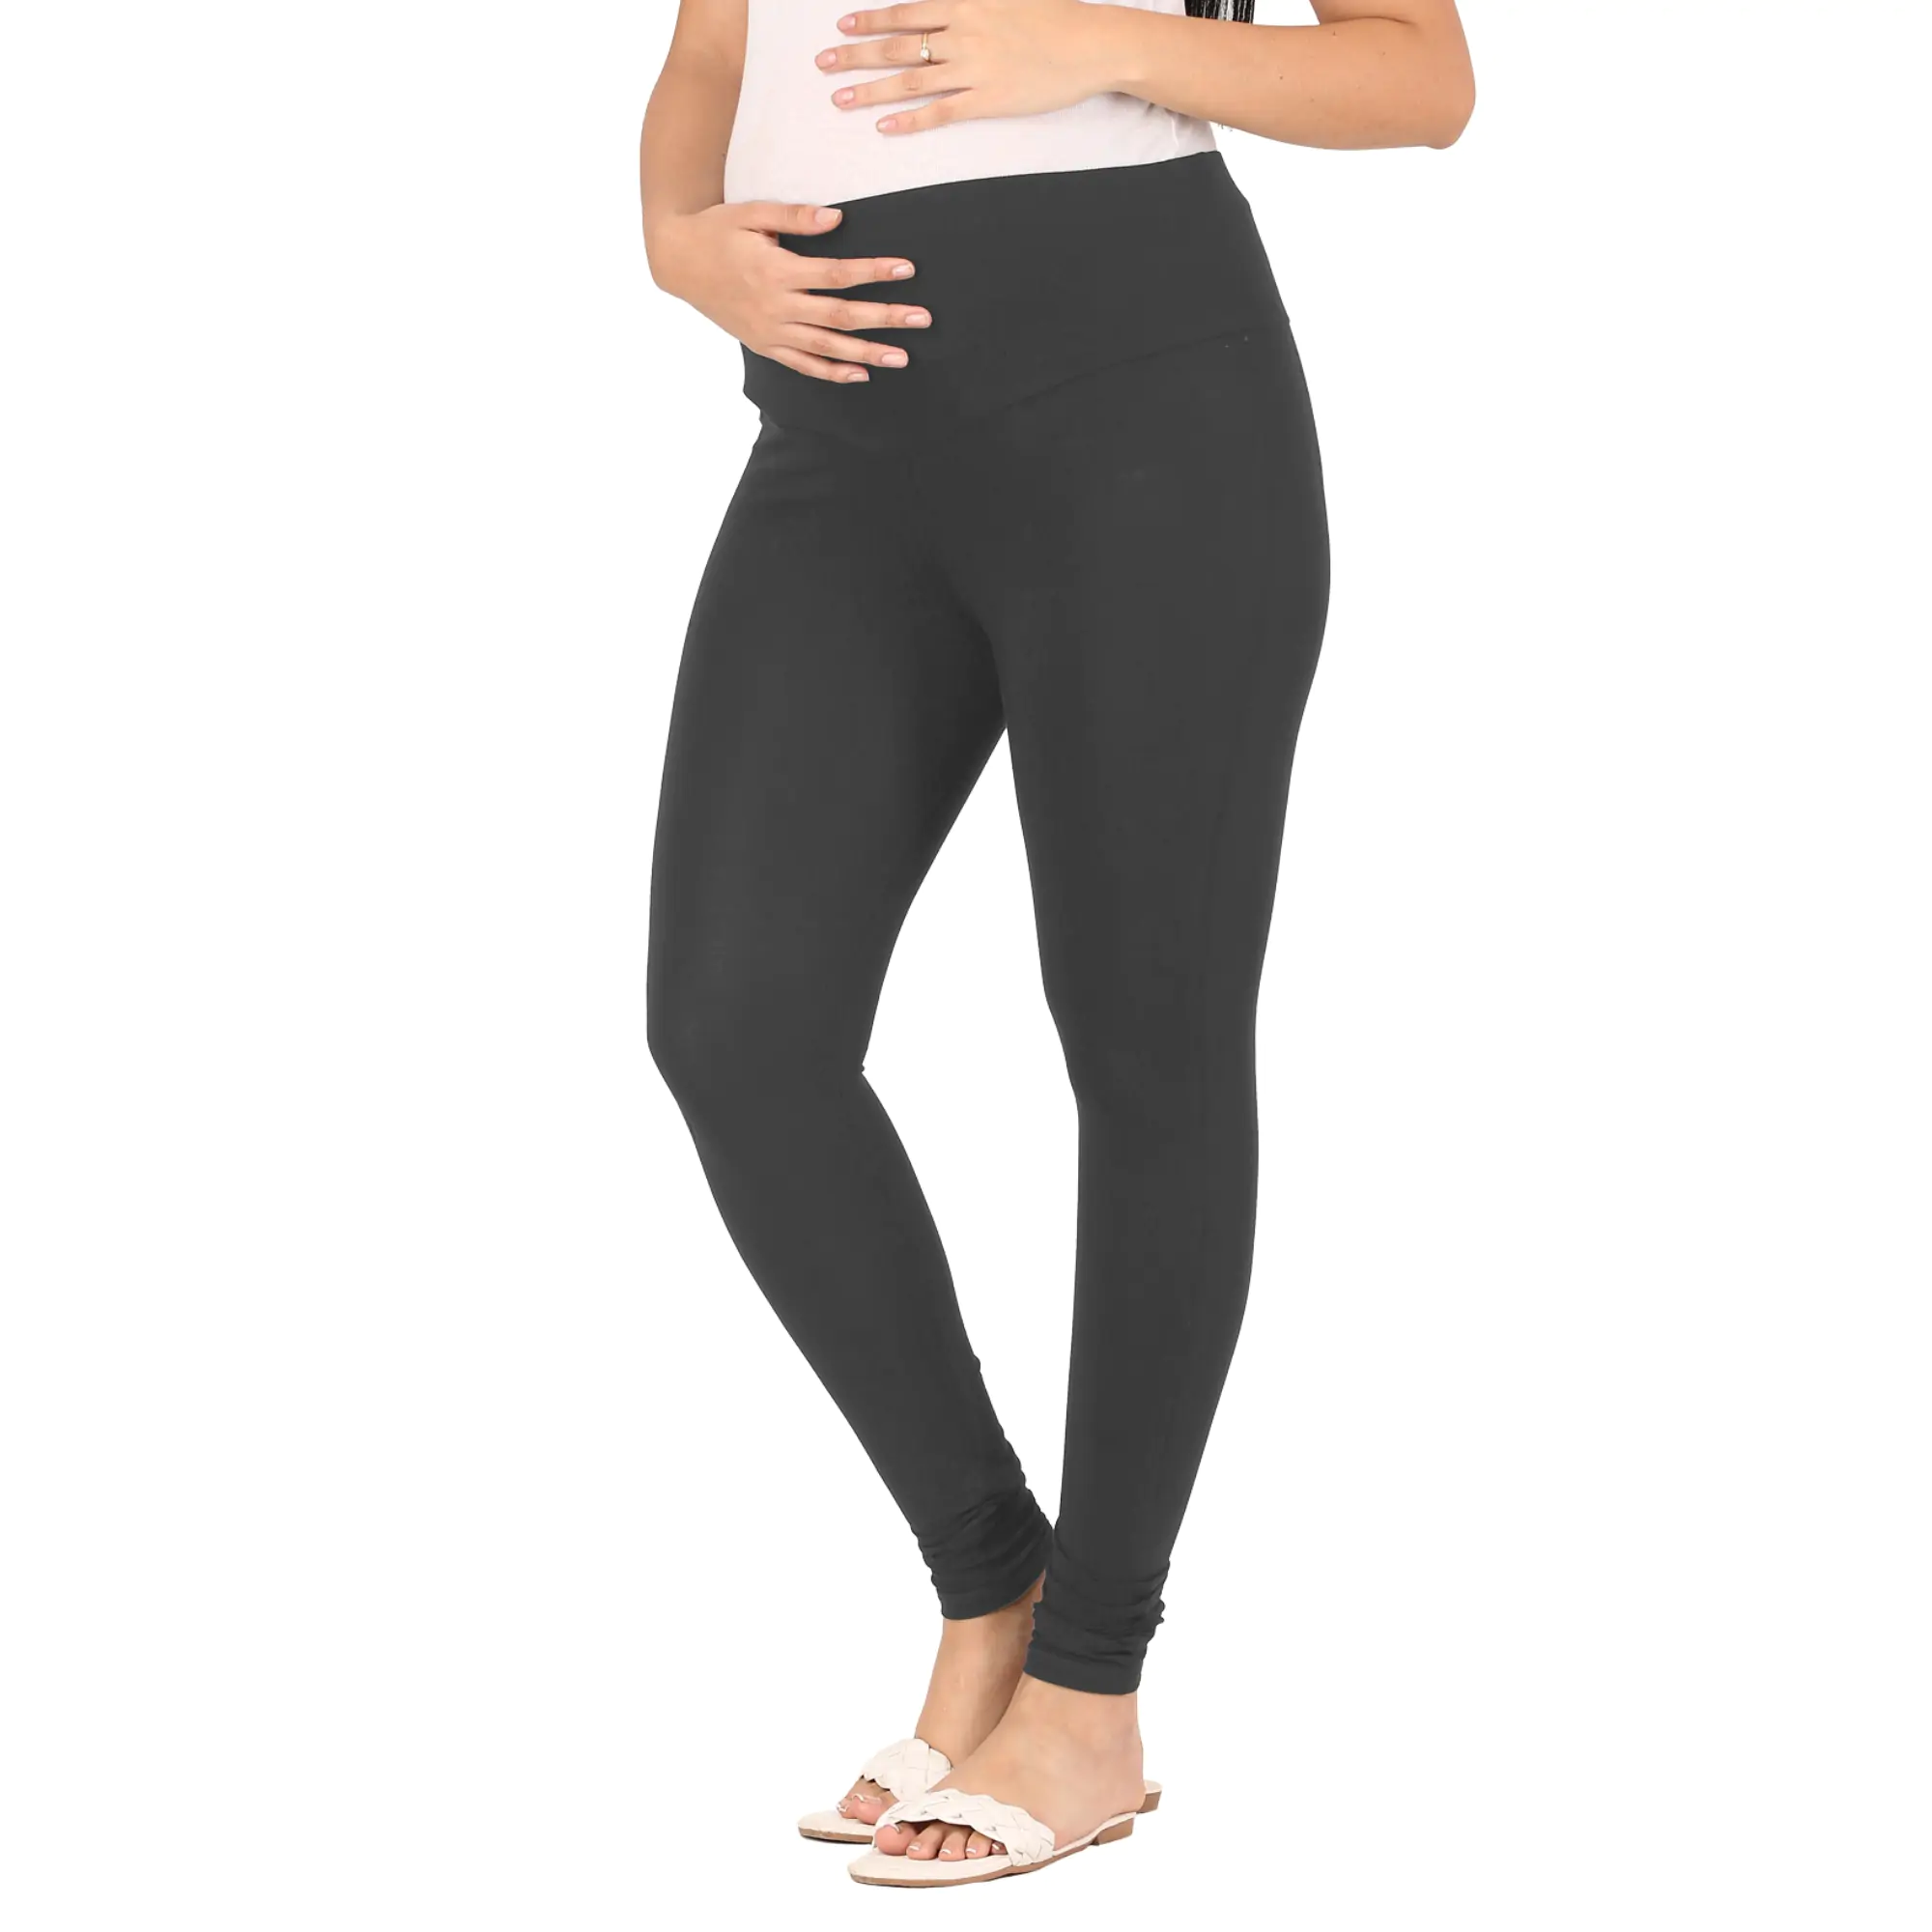 Stretchable Pregnancy & Post Delivery Leggings - Dark Grey (XL)